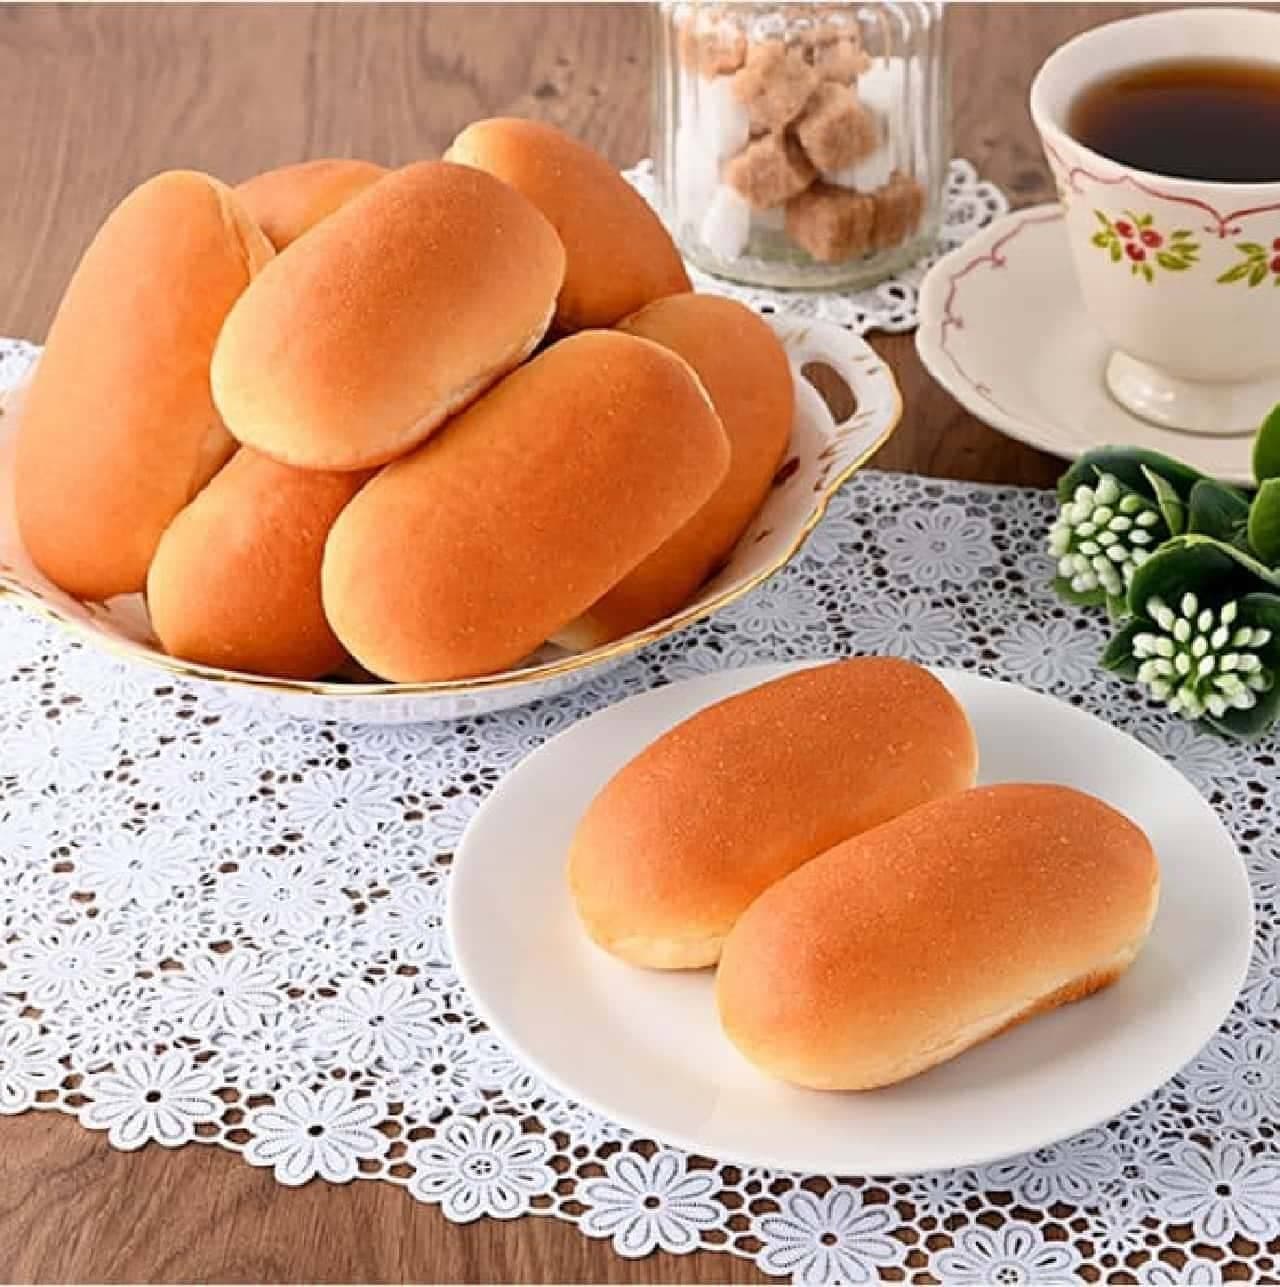 FamilyMart "Mini Bread Rolls, 12 pieces